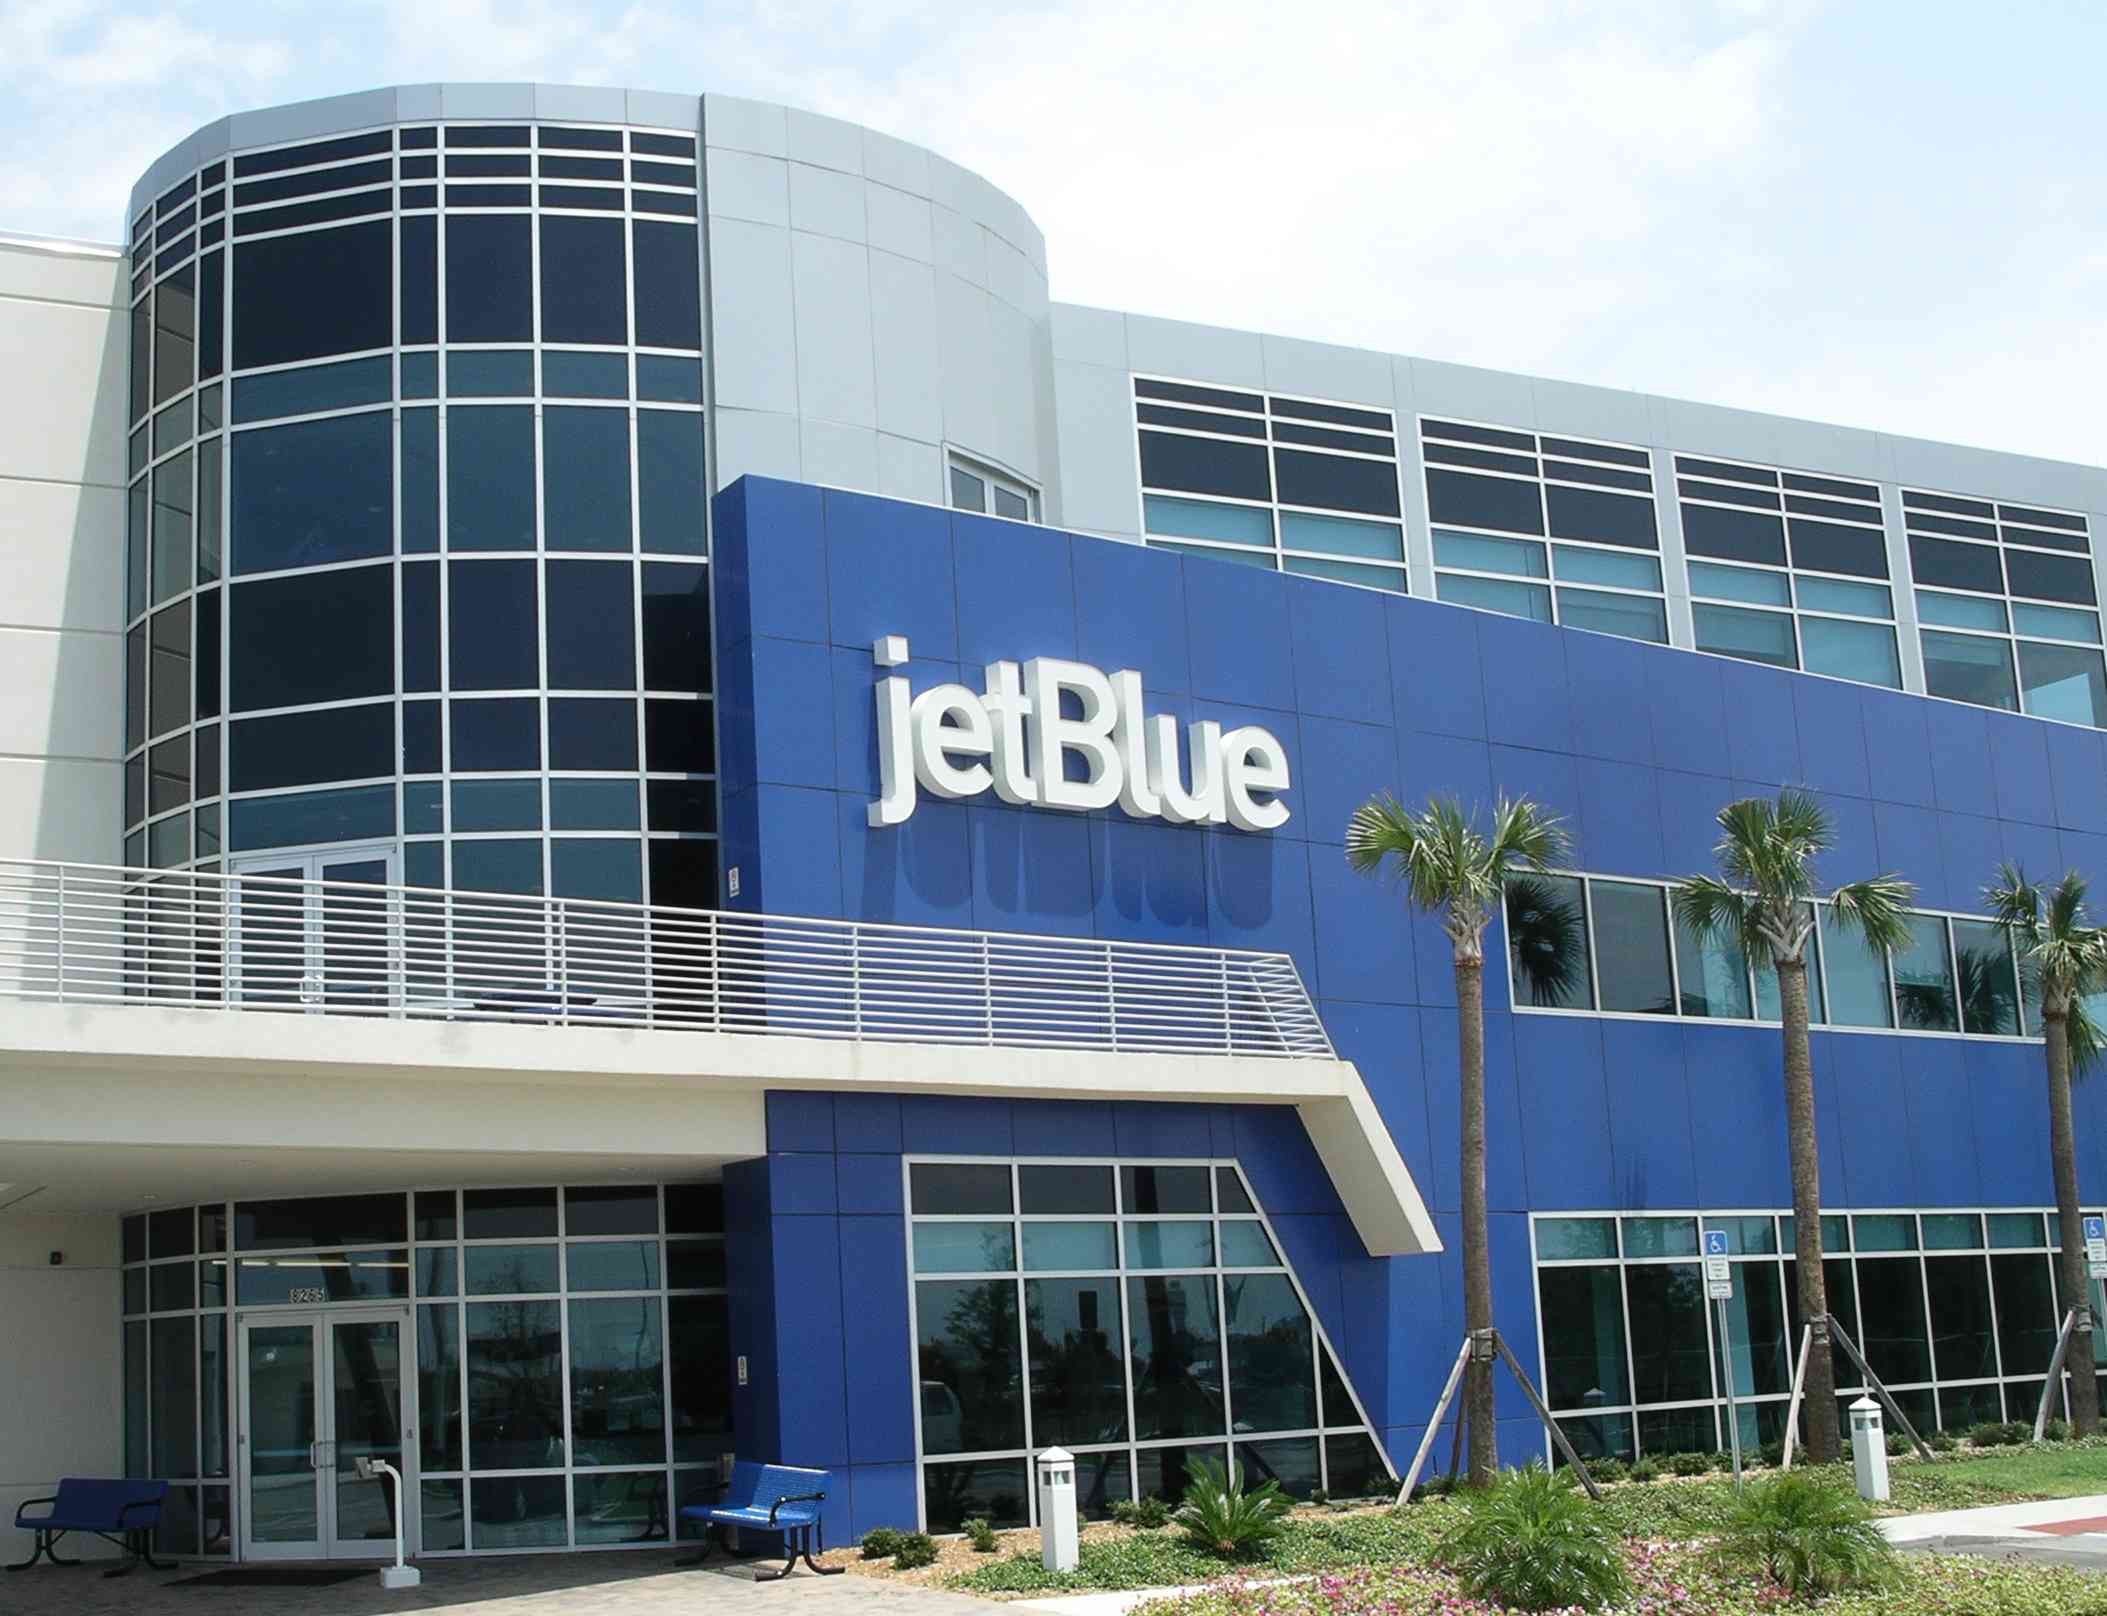 JetBlue's training facilities in Orlando, Florida. Photo by J. Jeff Kober.